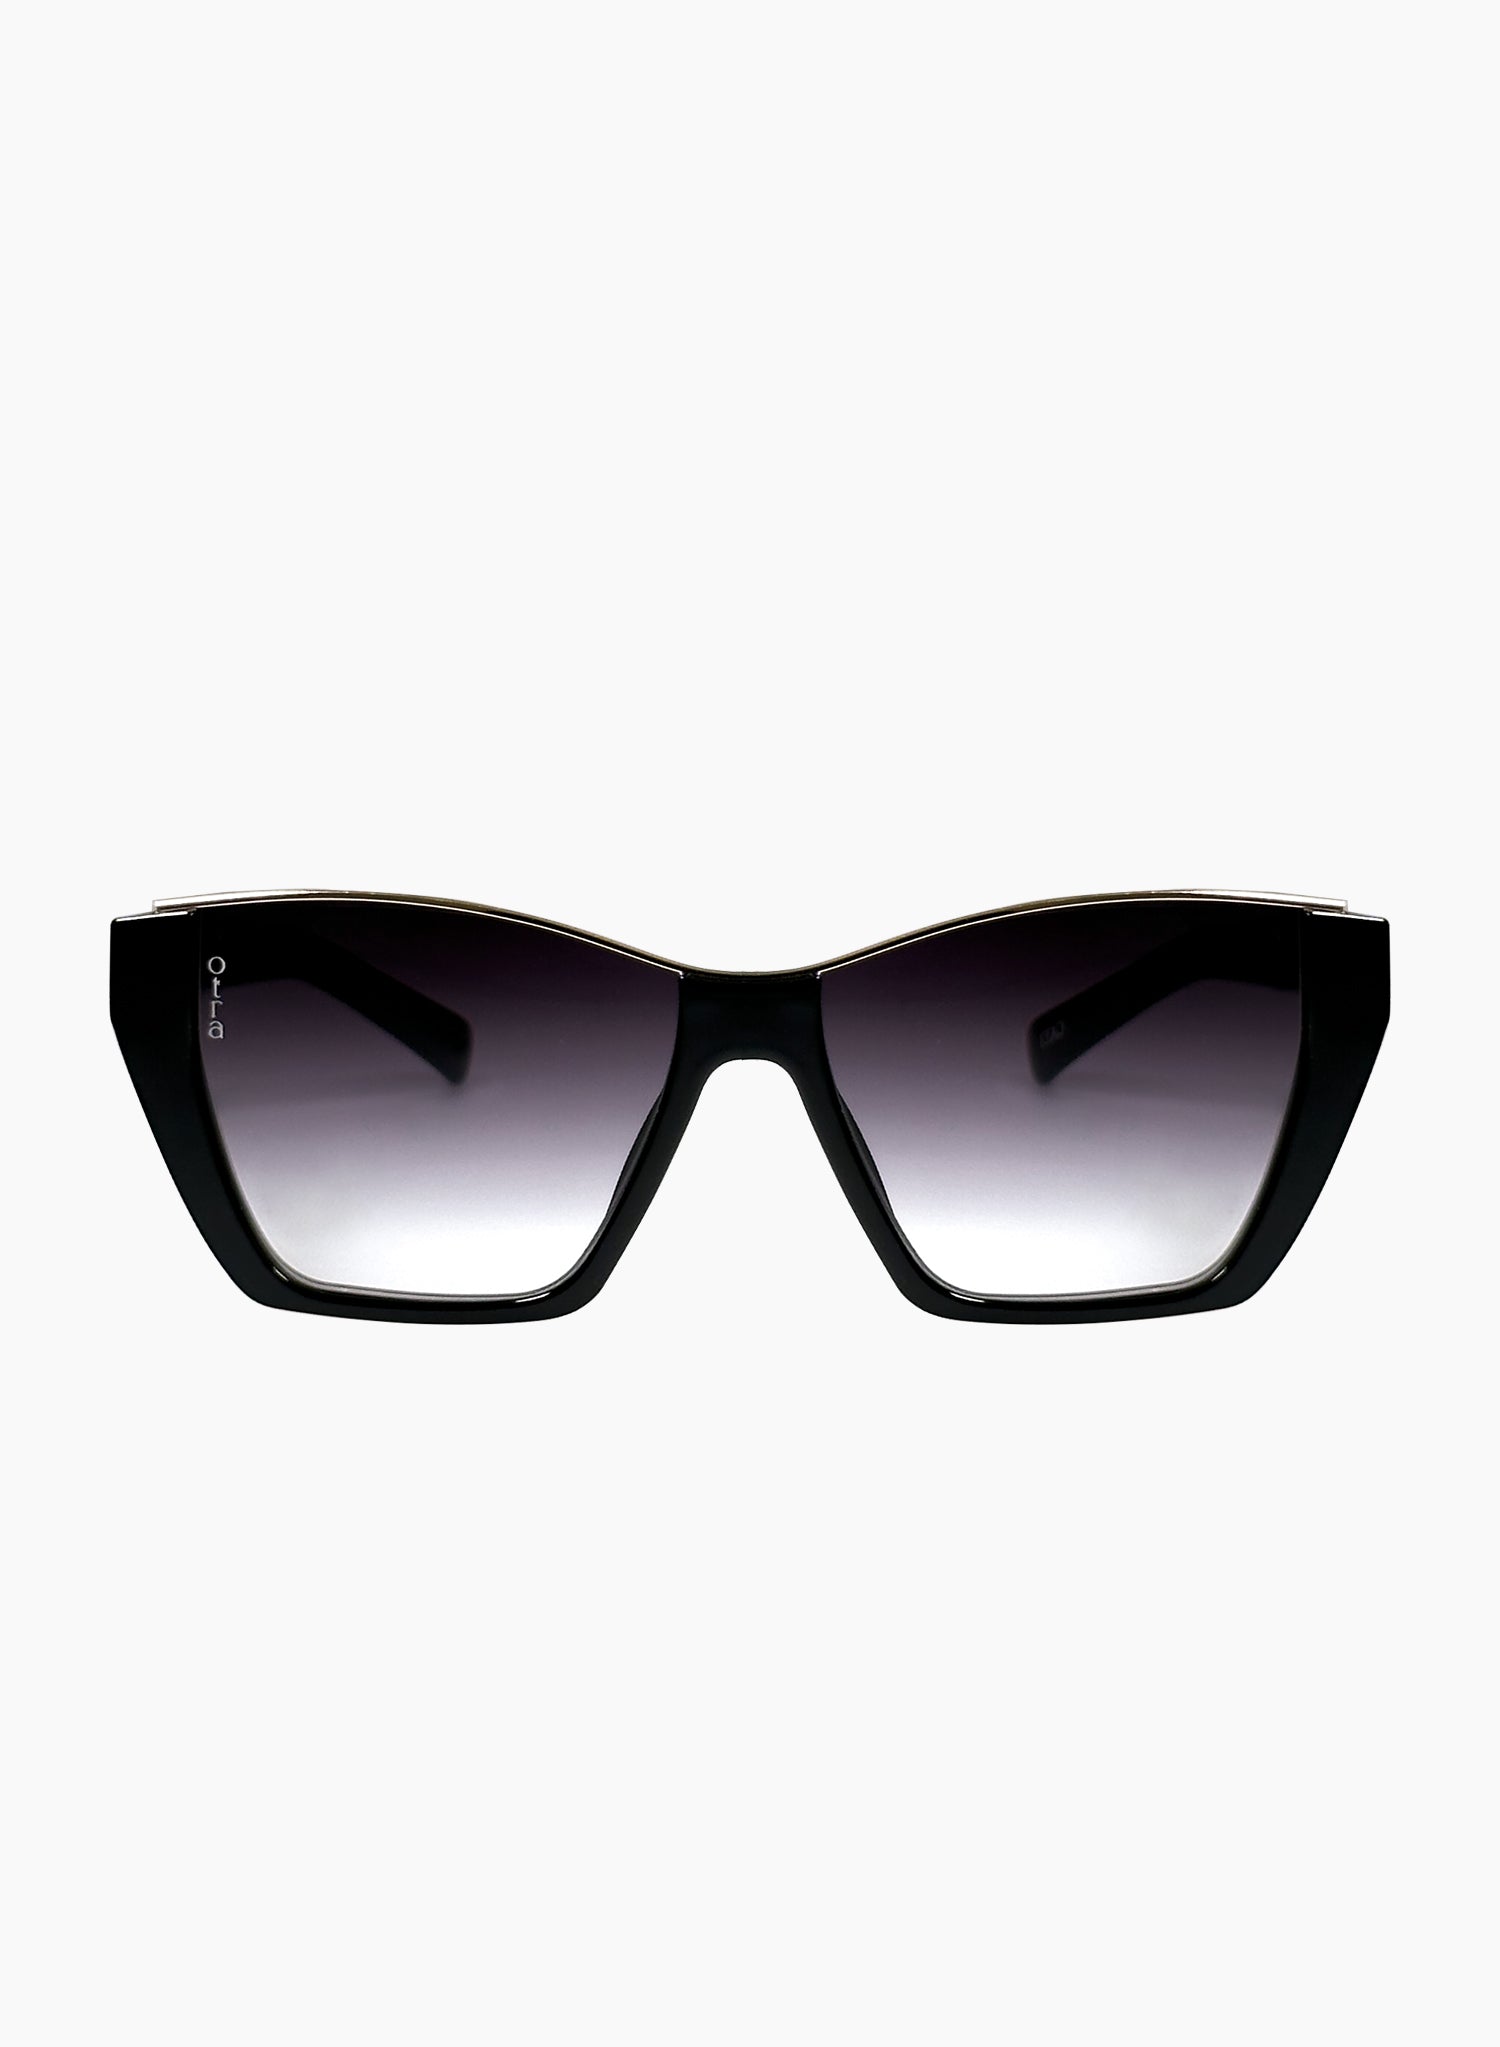 Belle cat eye sunglasses in black